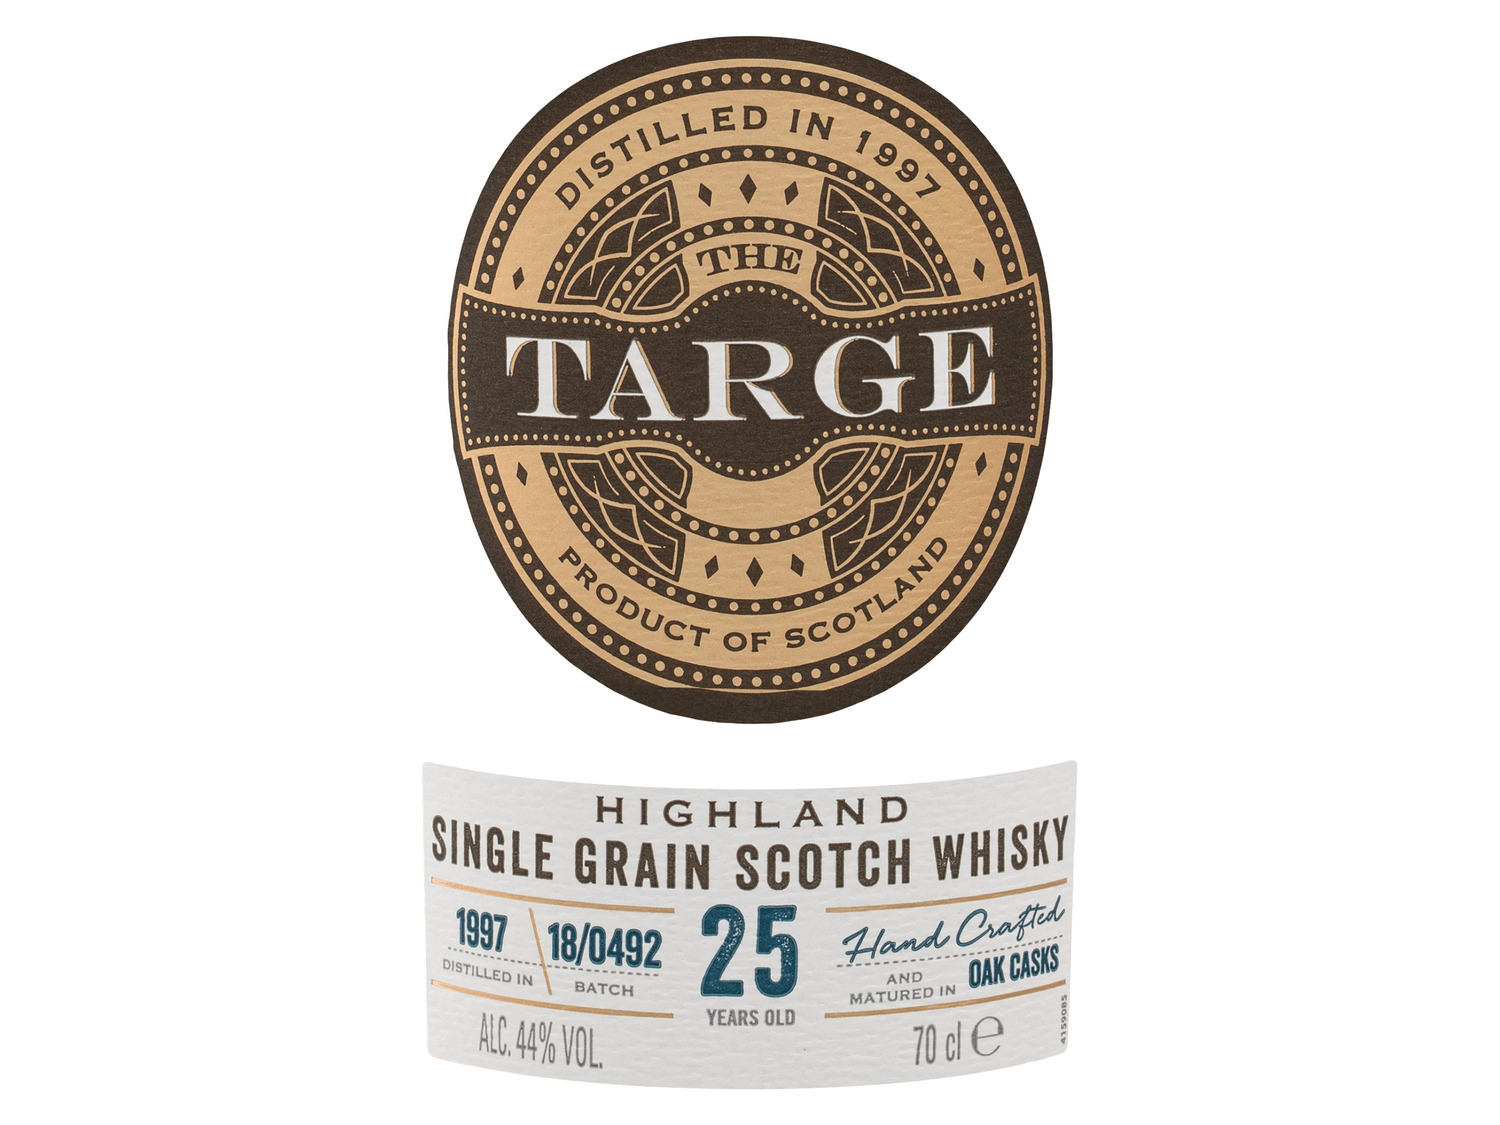 Highland Scotch The Jahre… Single Grain 25 Whisky Targe